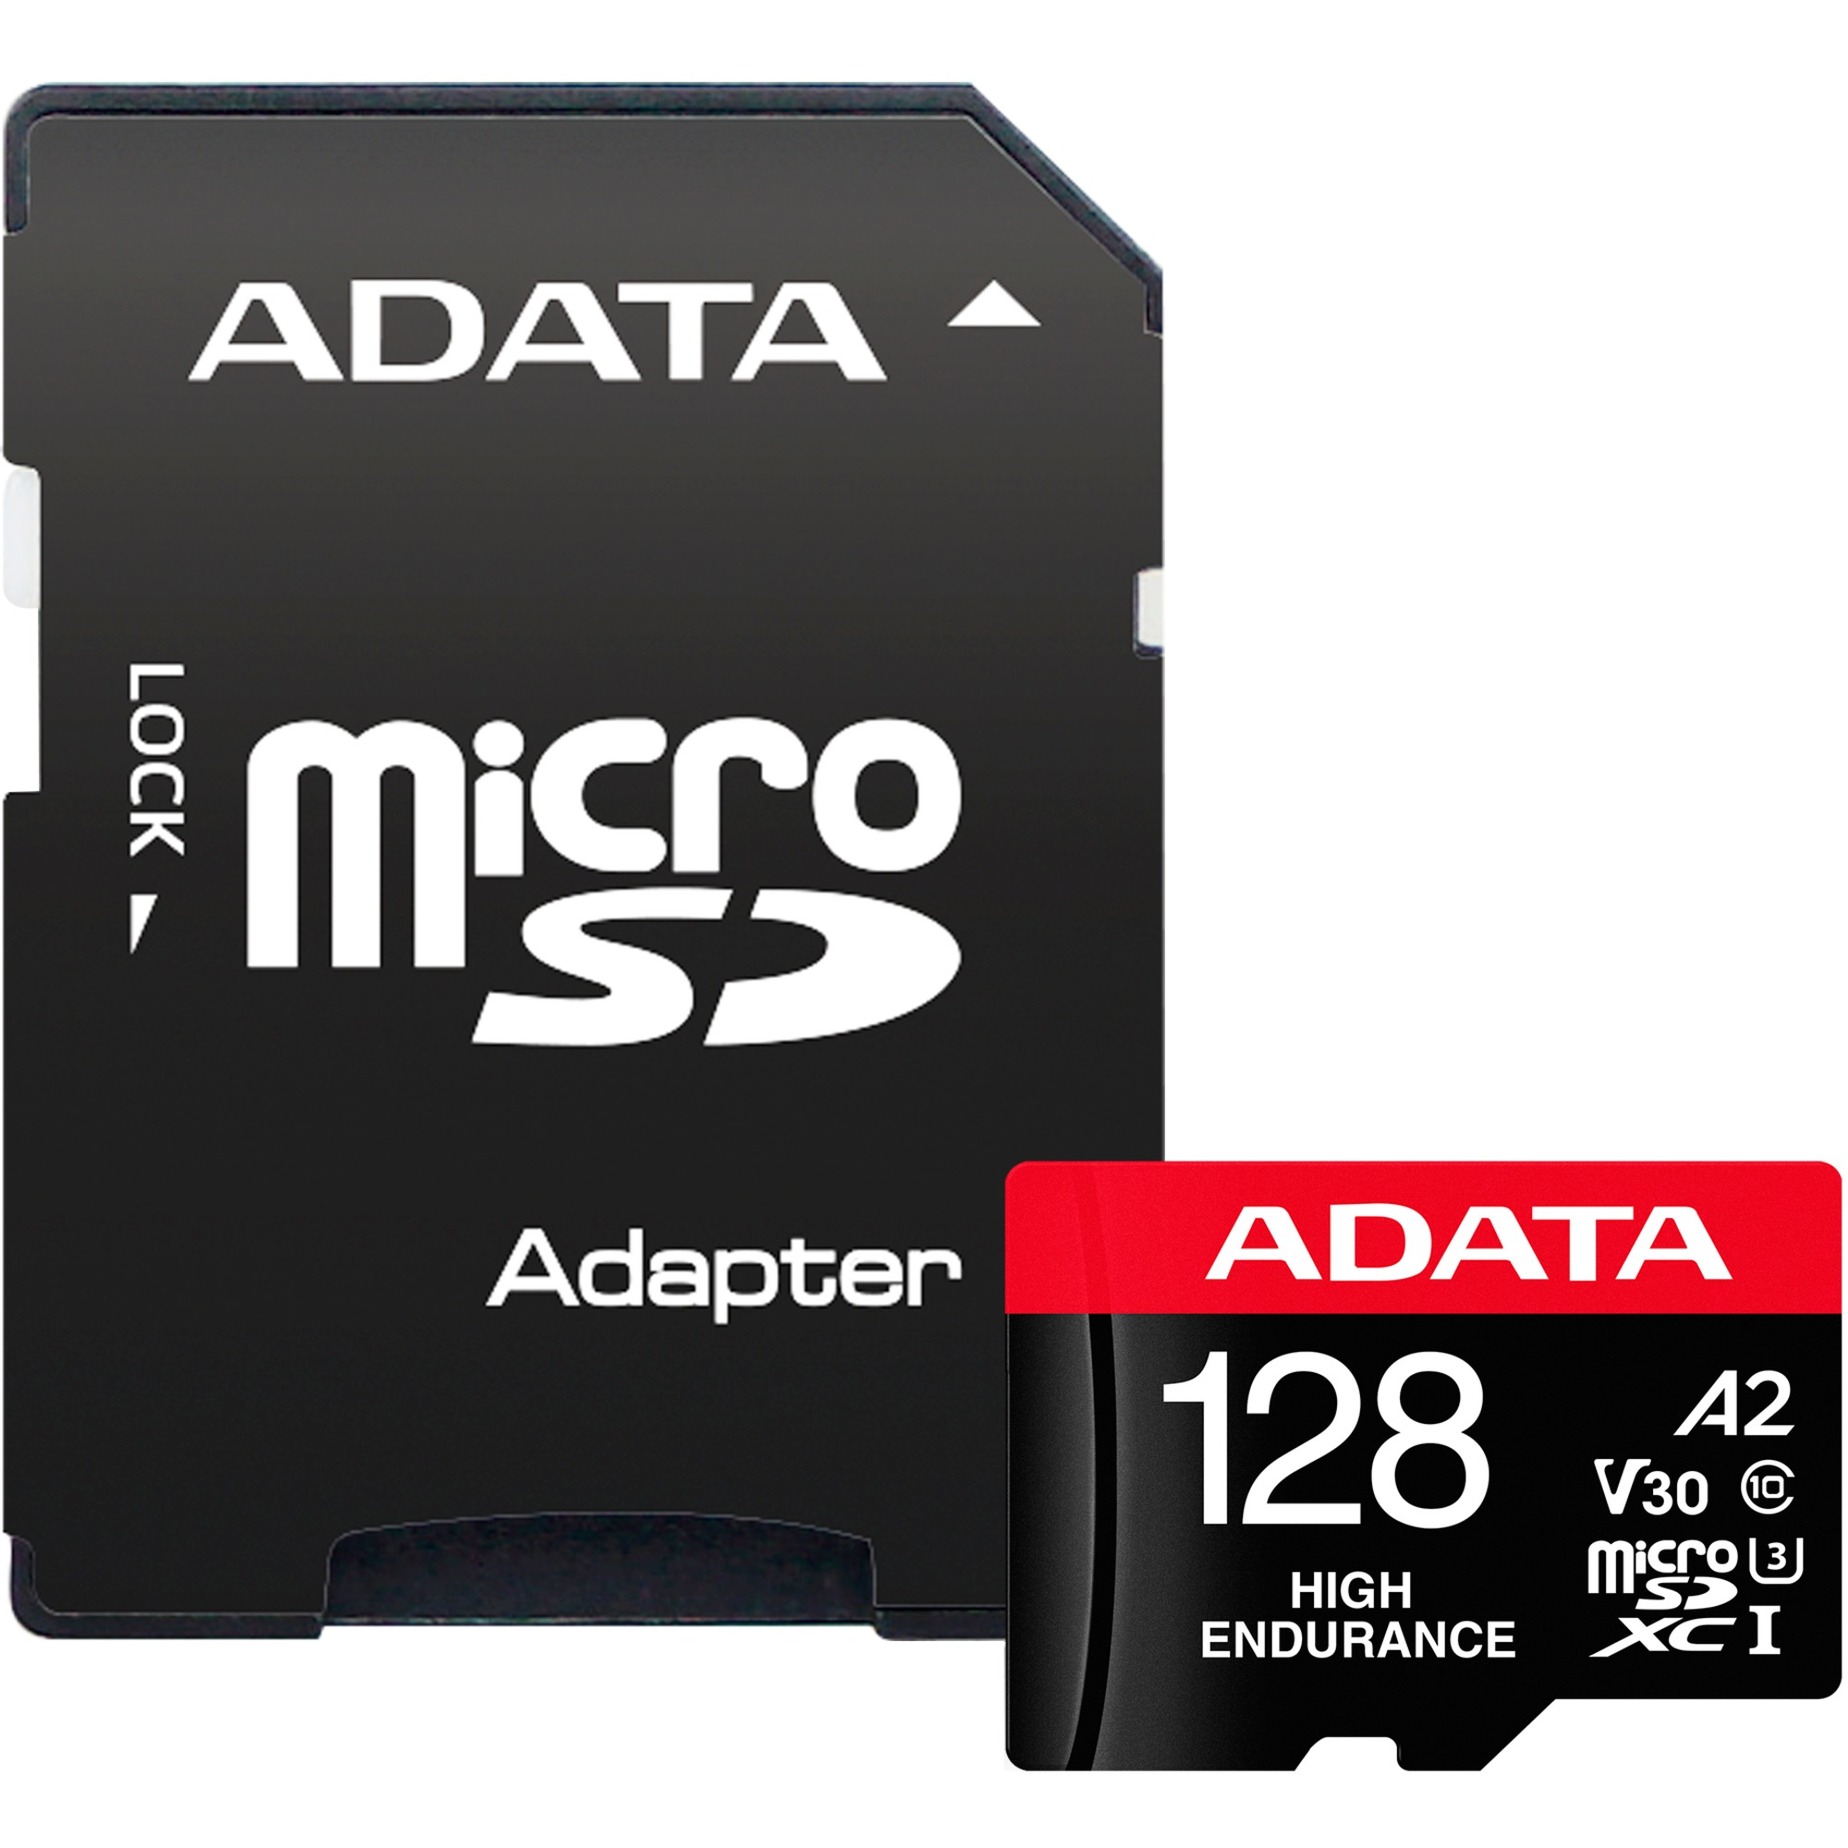 High Endurance 128 GB microSDXC, Speicherkarte von ADATA